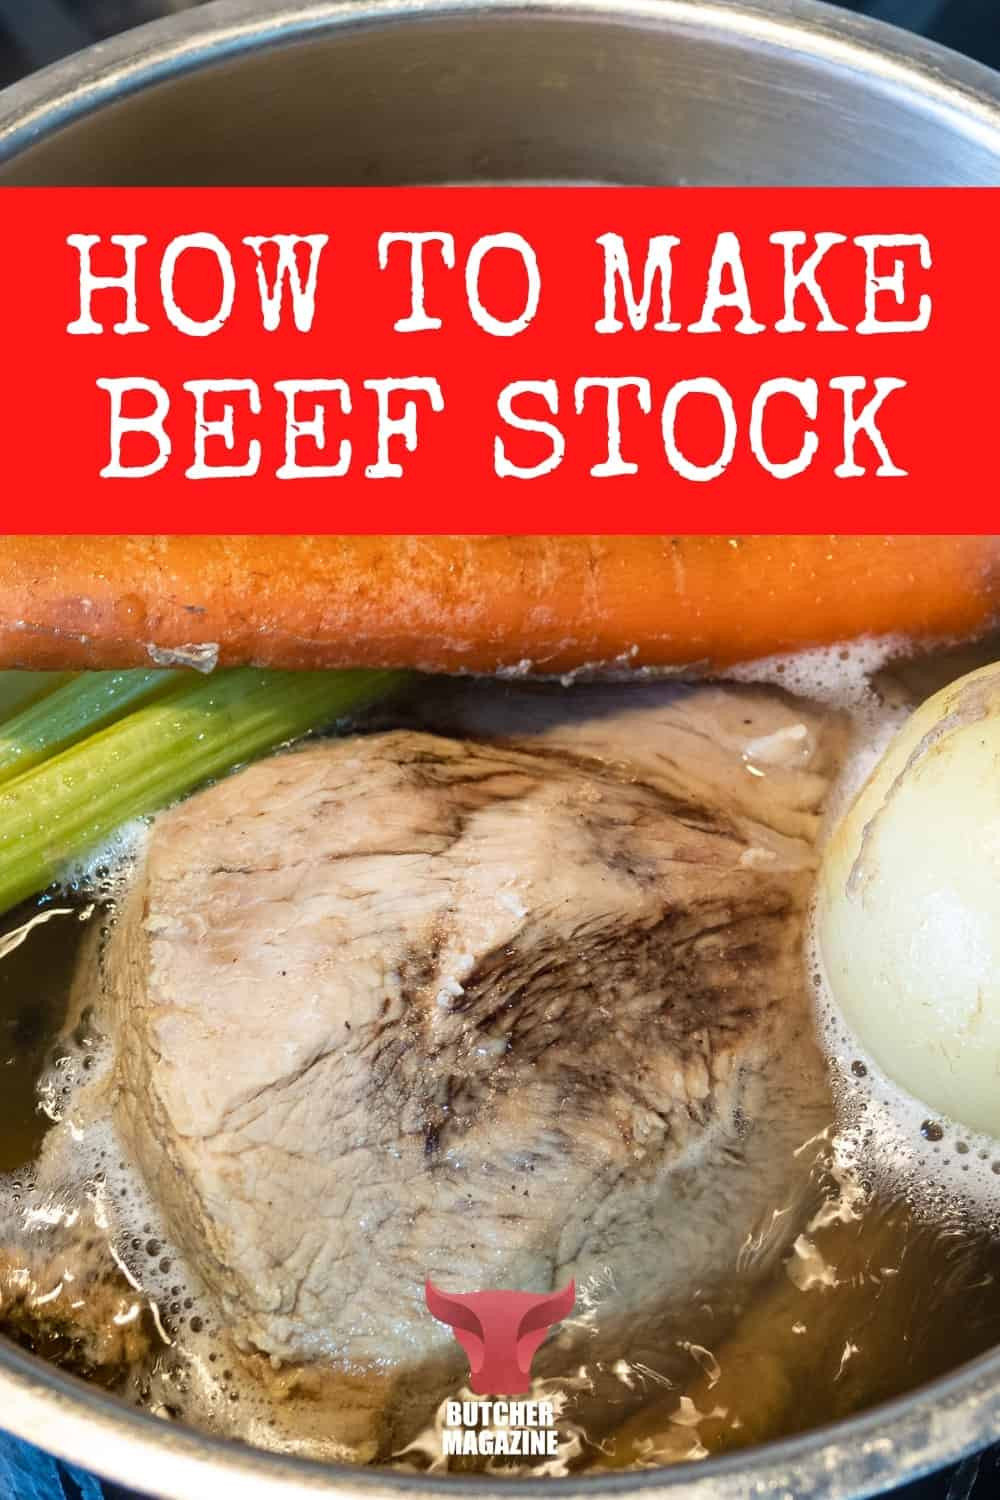 Beef Stock Recipe